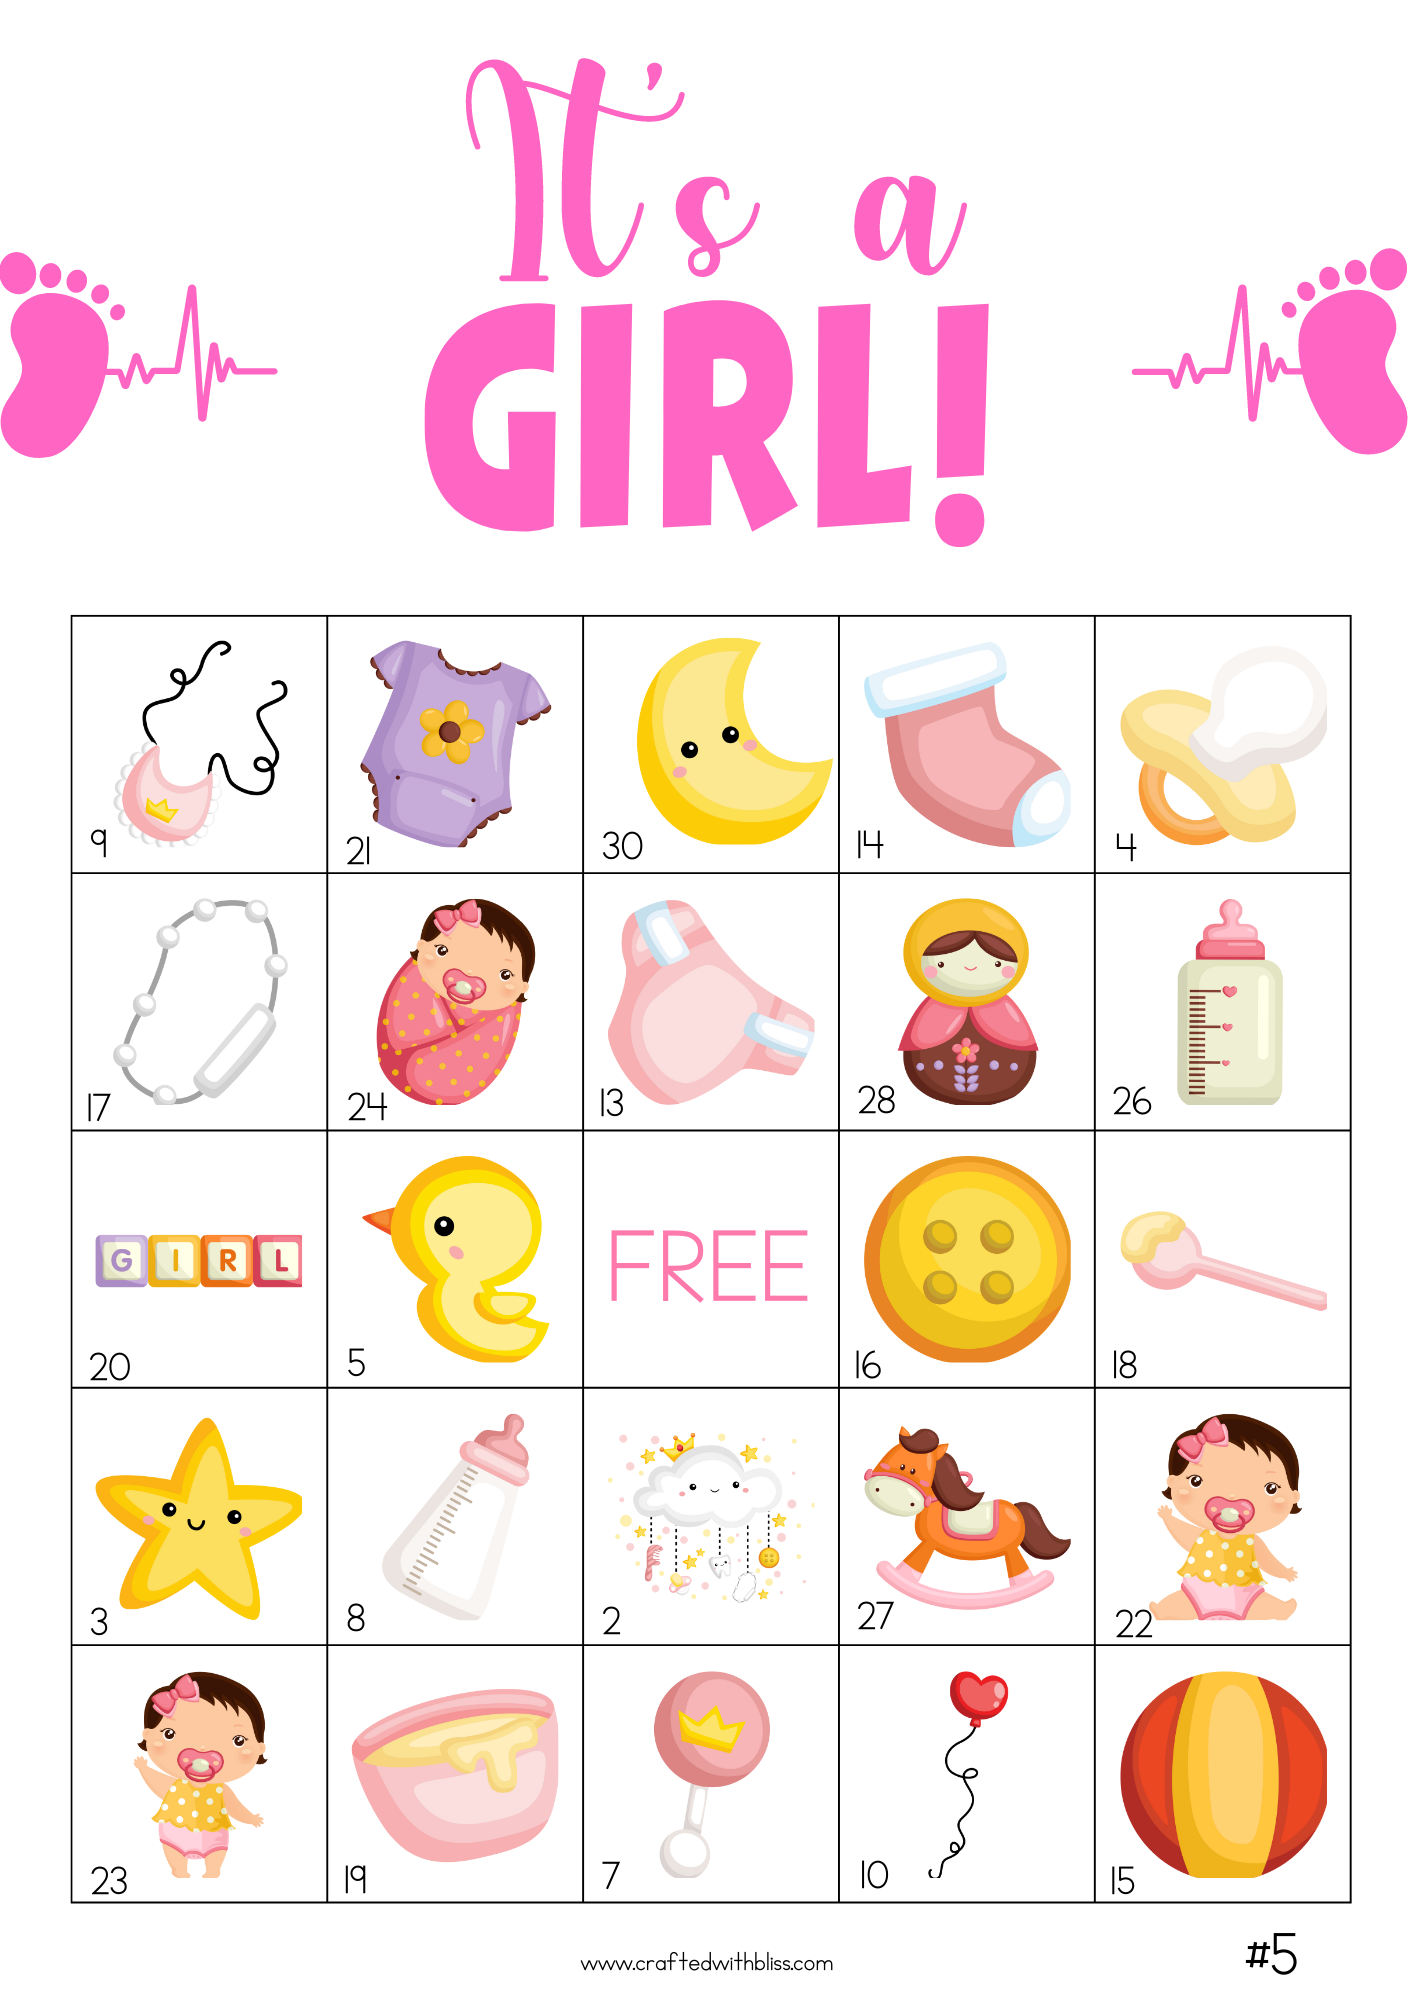 50 It's A Girl Bingo Cards (5x5)